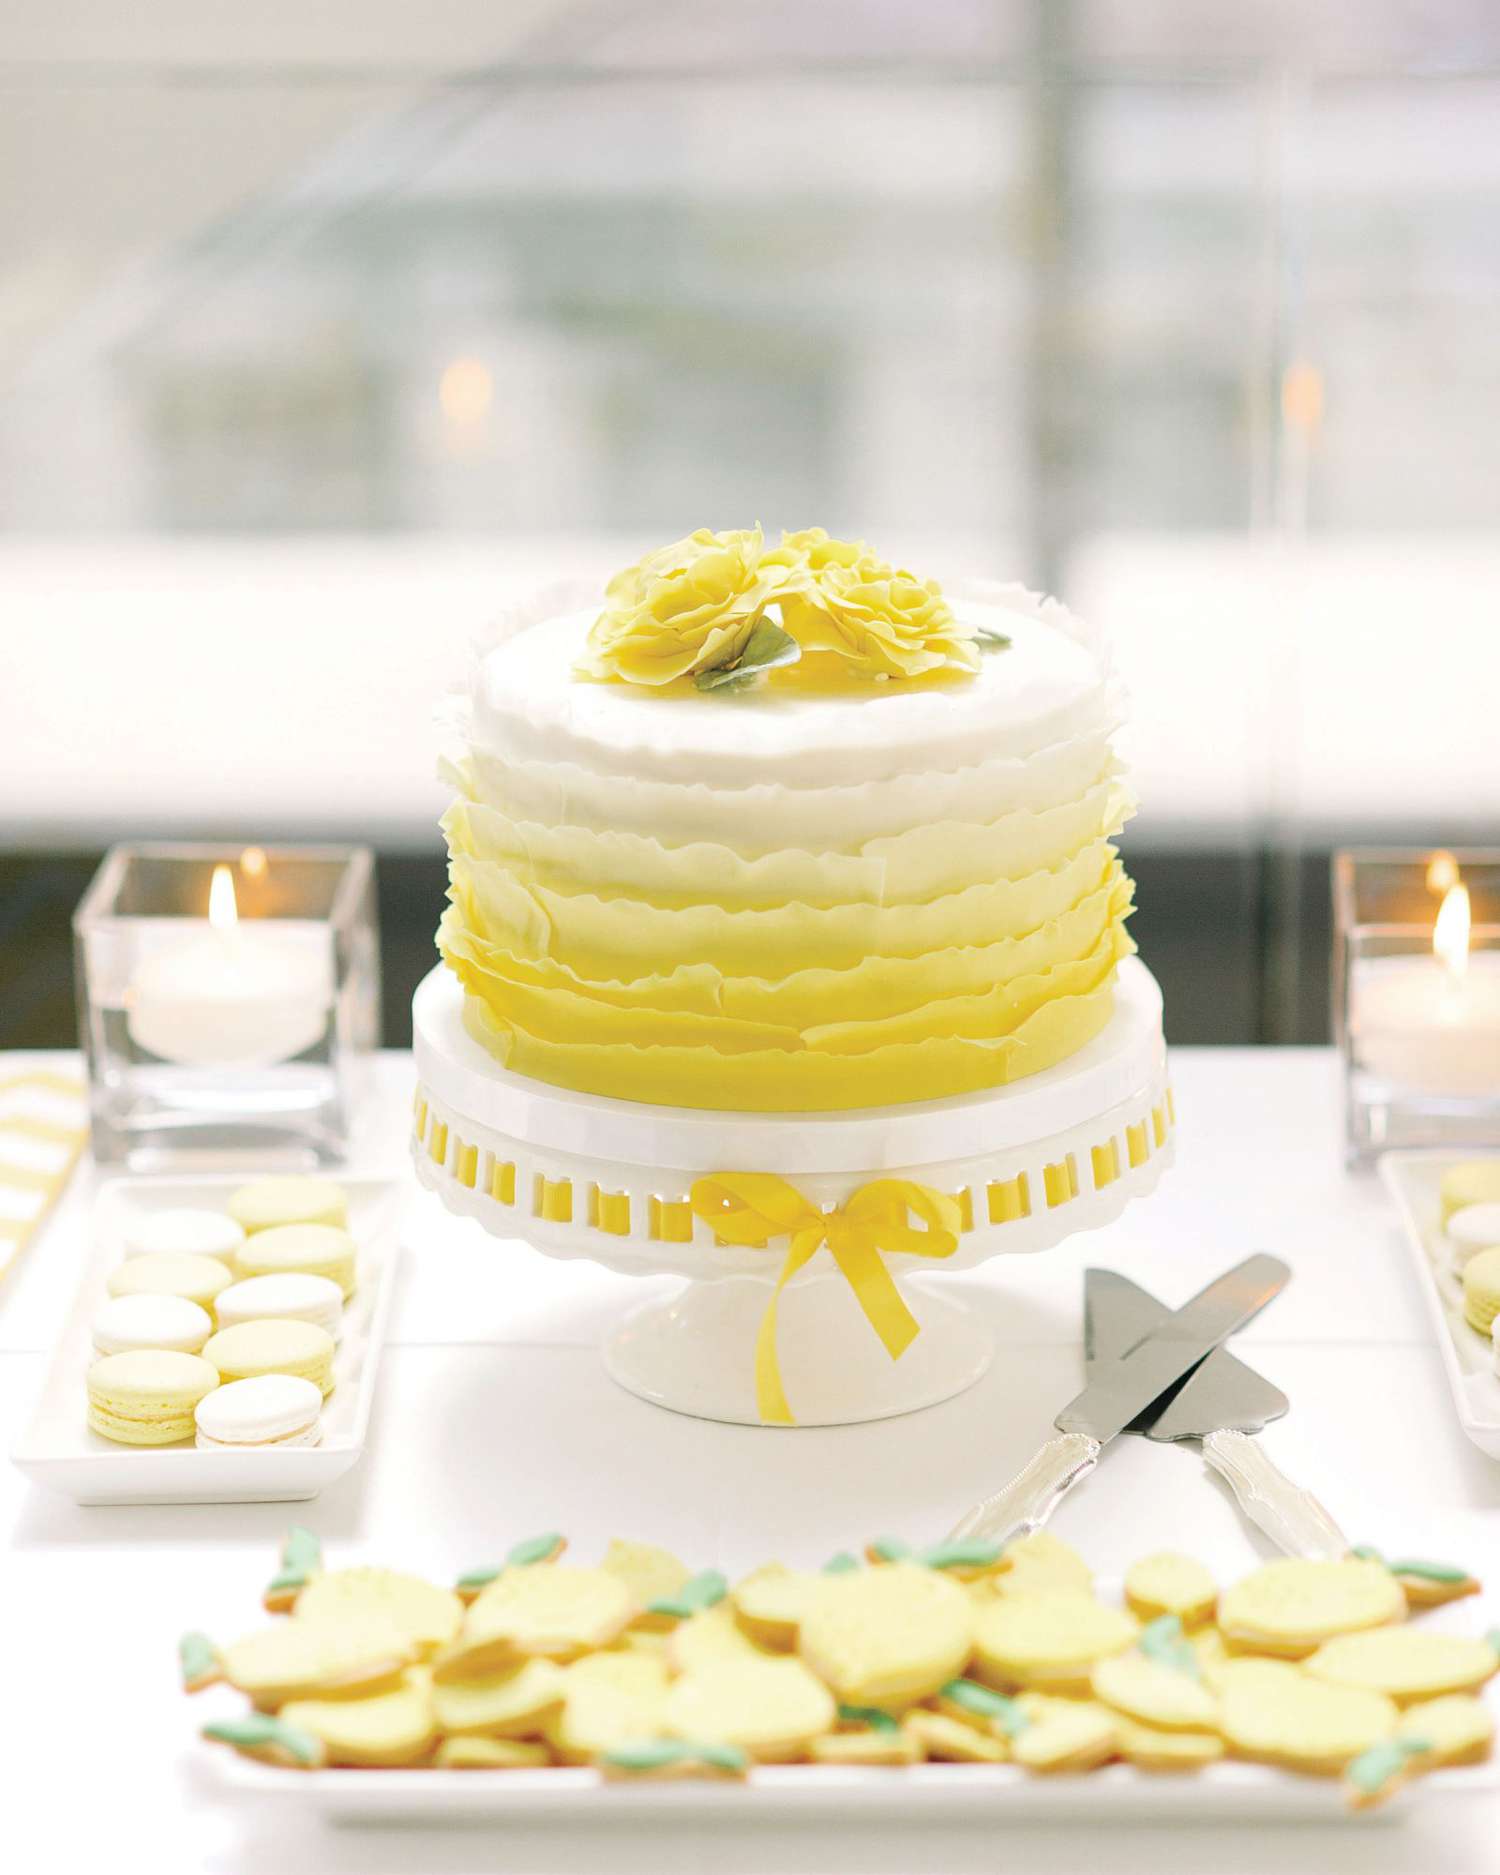 mamy-dan-wedding-canada-details-yellow-cake-floral-009-s112629.jpg